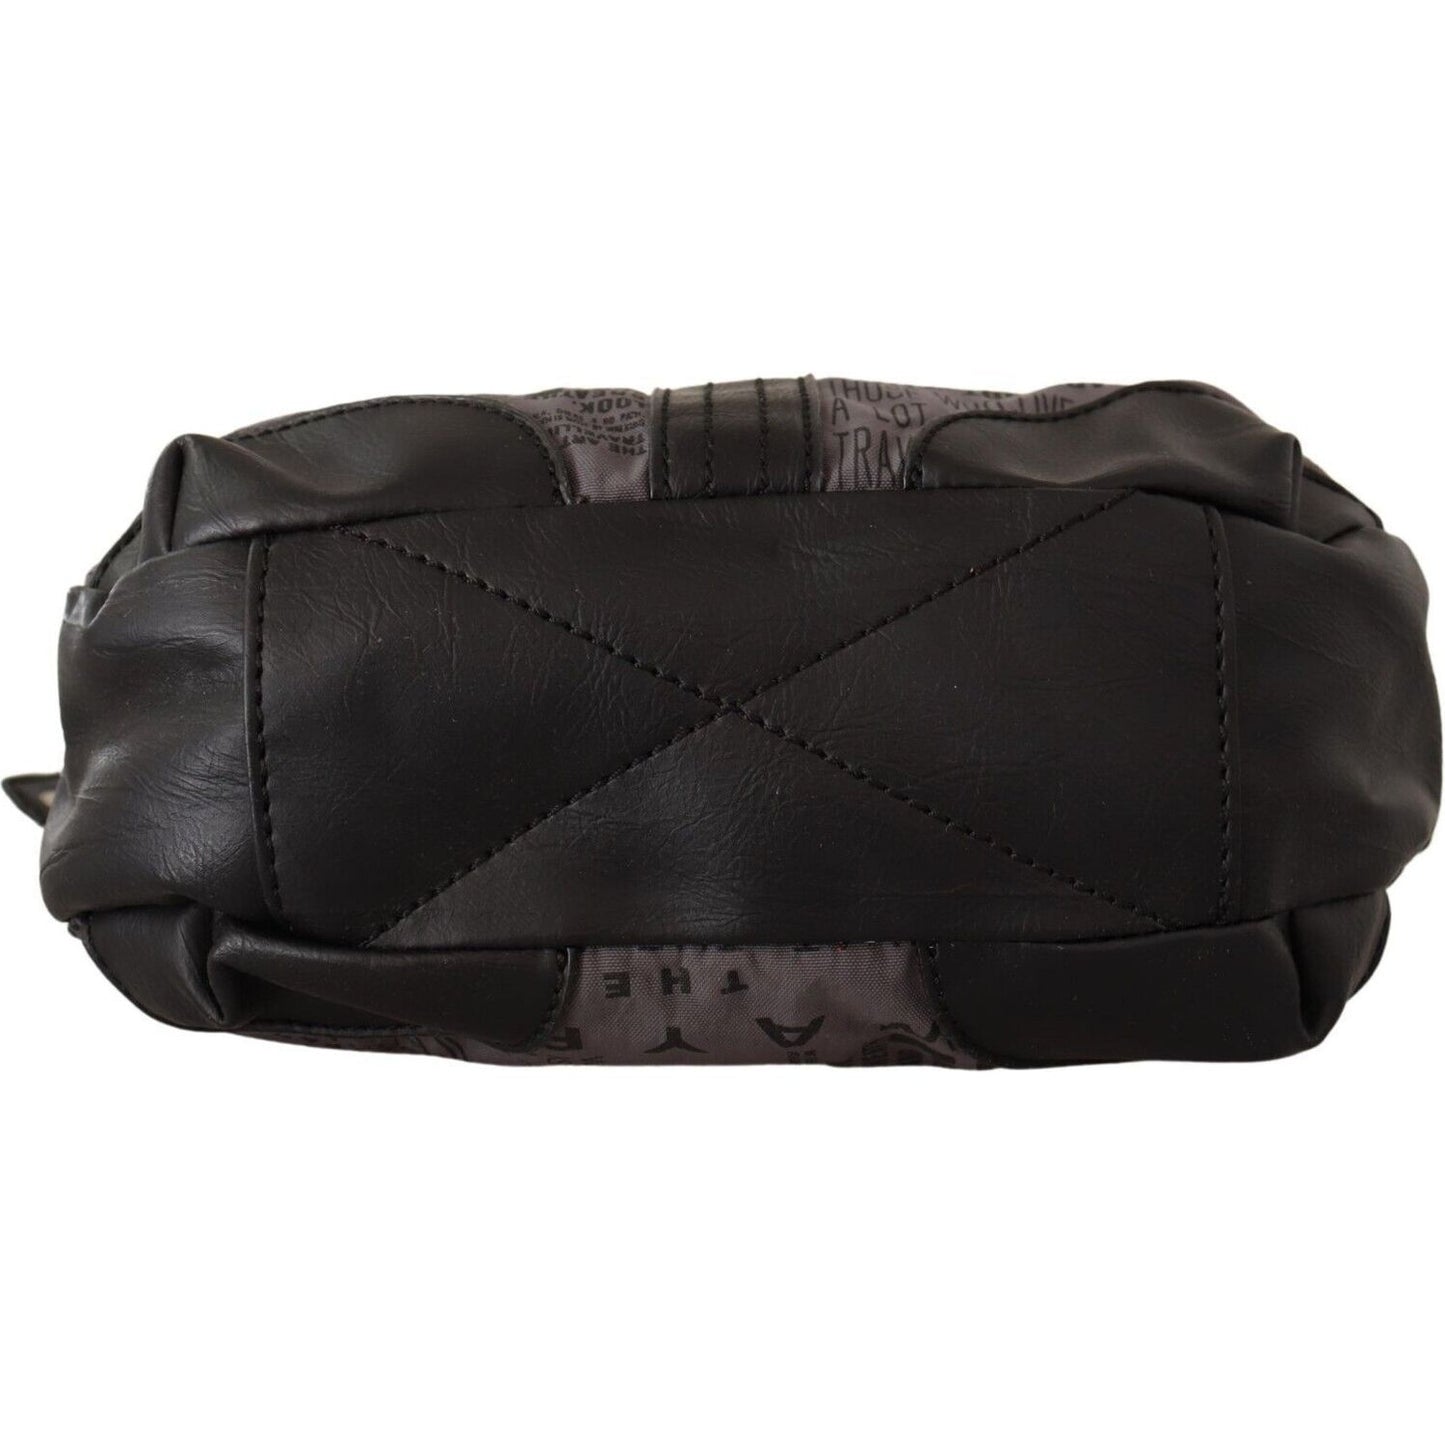 WAYFARER Chic Gray Fabric Shoulder Handbag gray-printed-handbag-shoulder-purse-fabric-bag Shoulder Bag s-l1600-3-22-5b998898-5d8.jpg